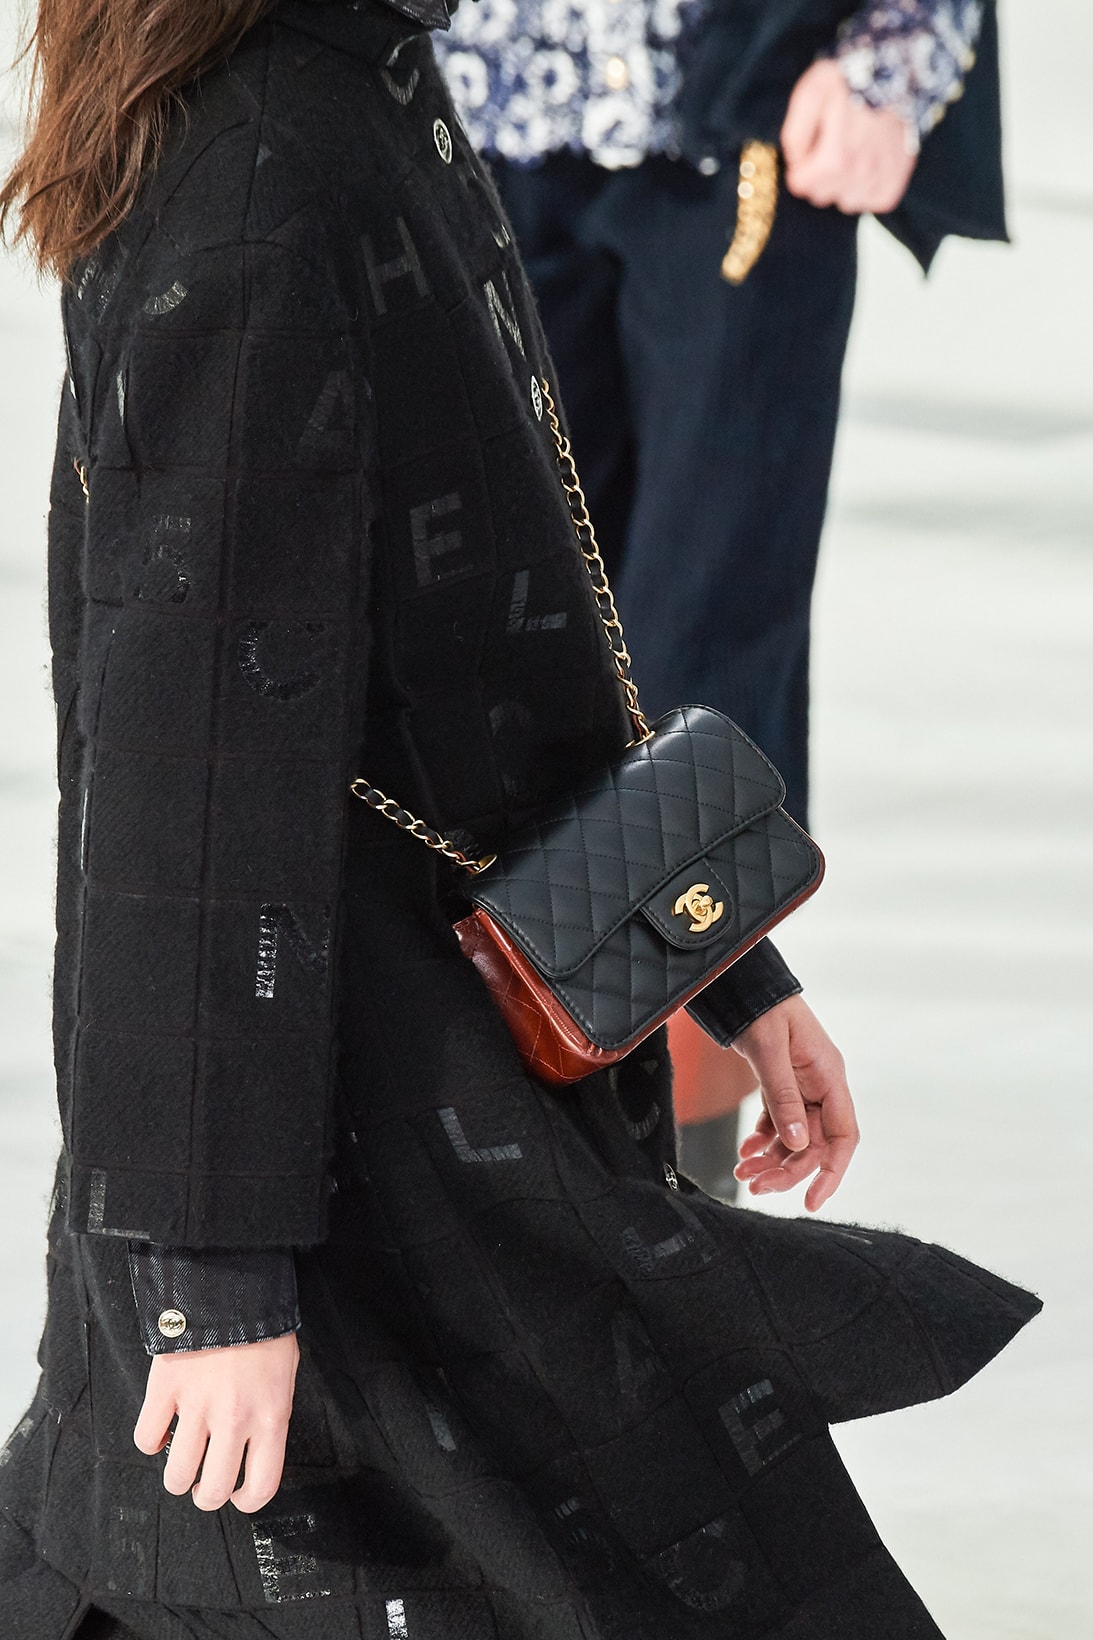 leather chanel handbags